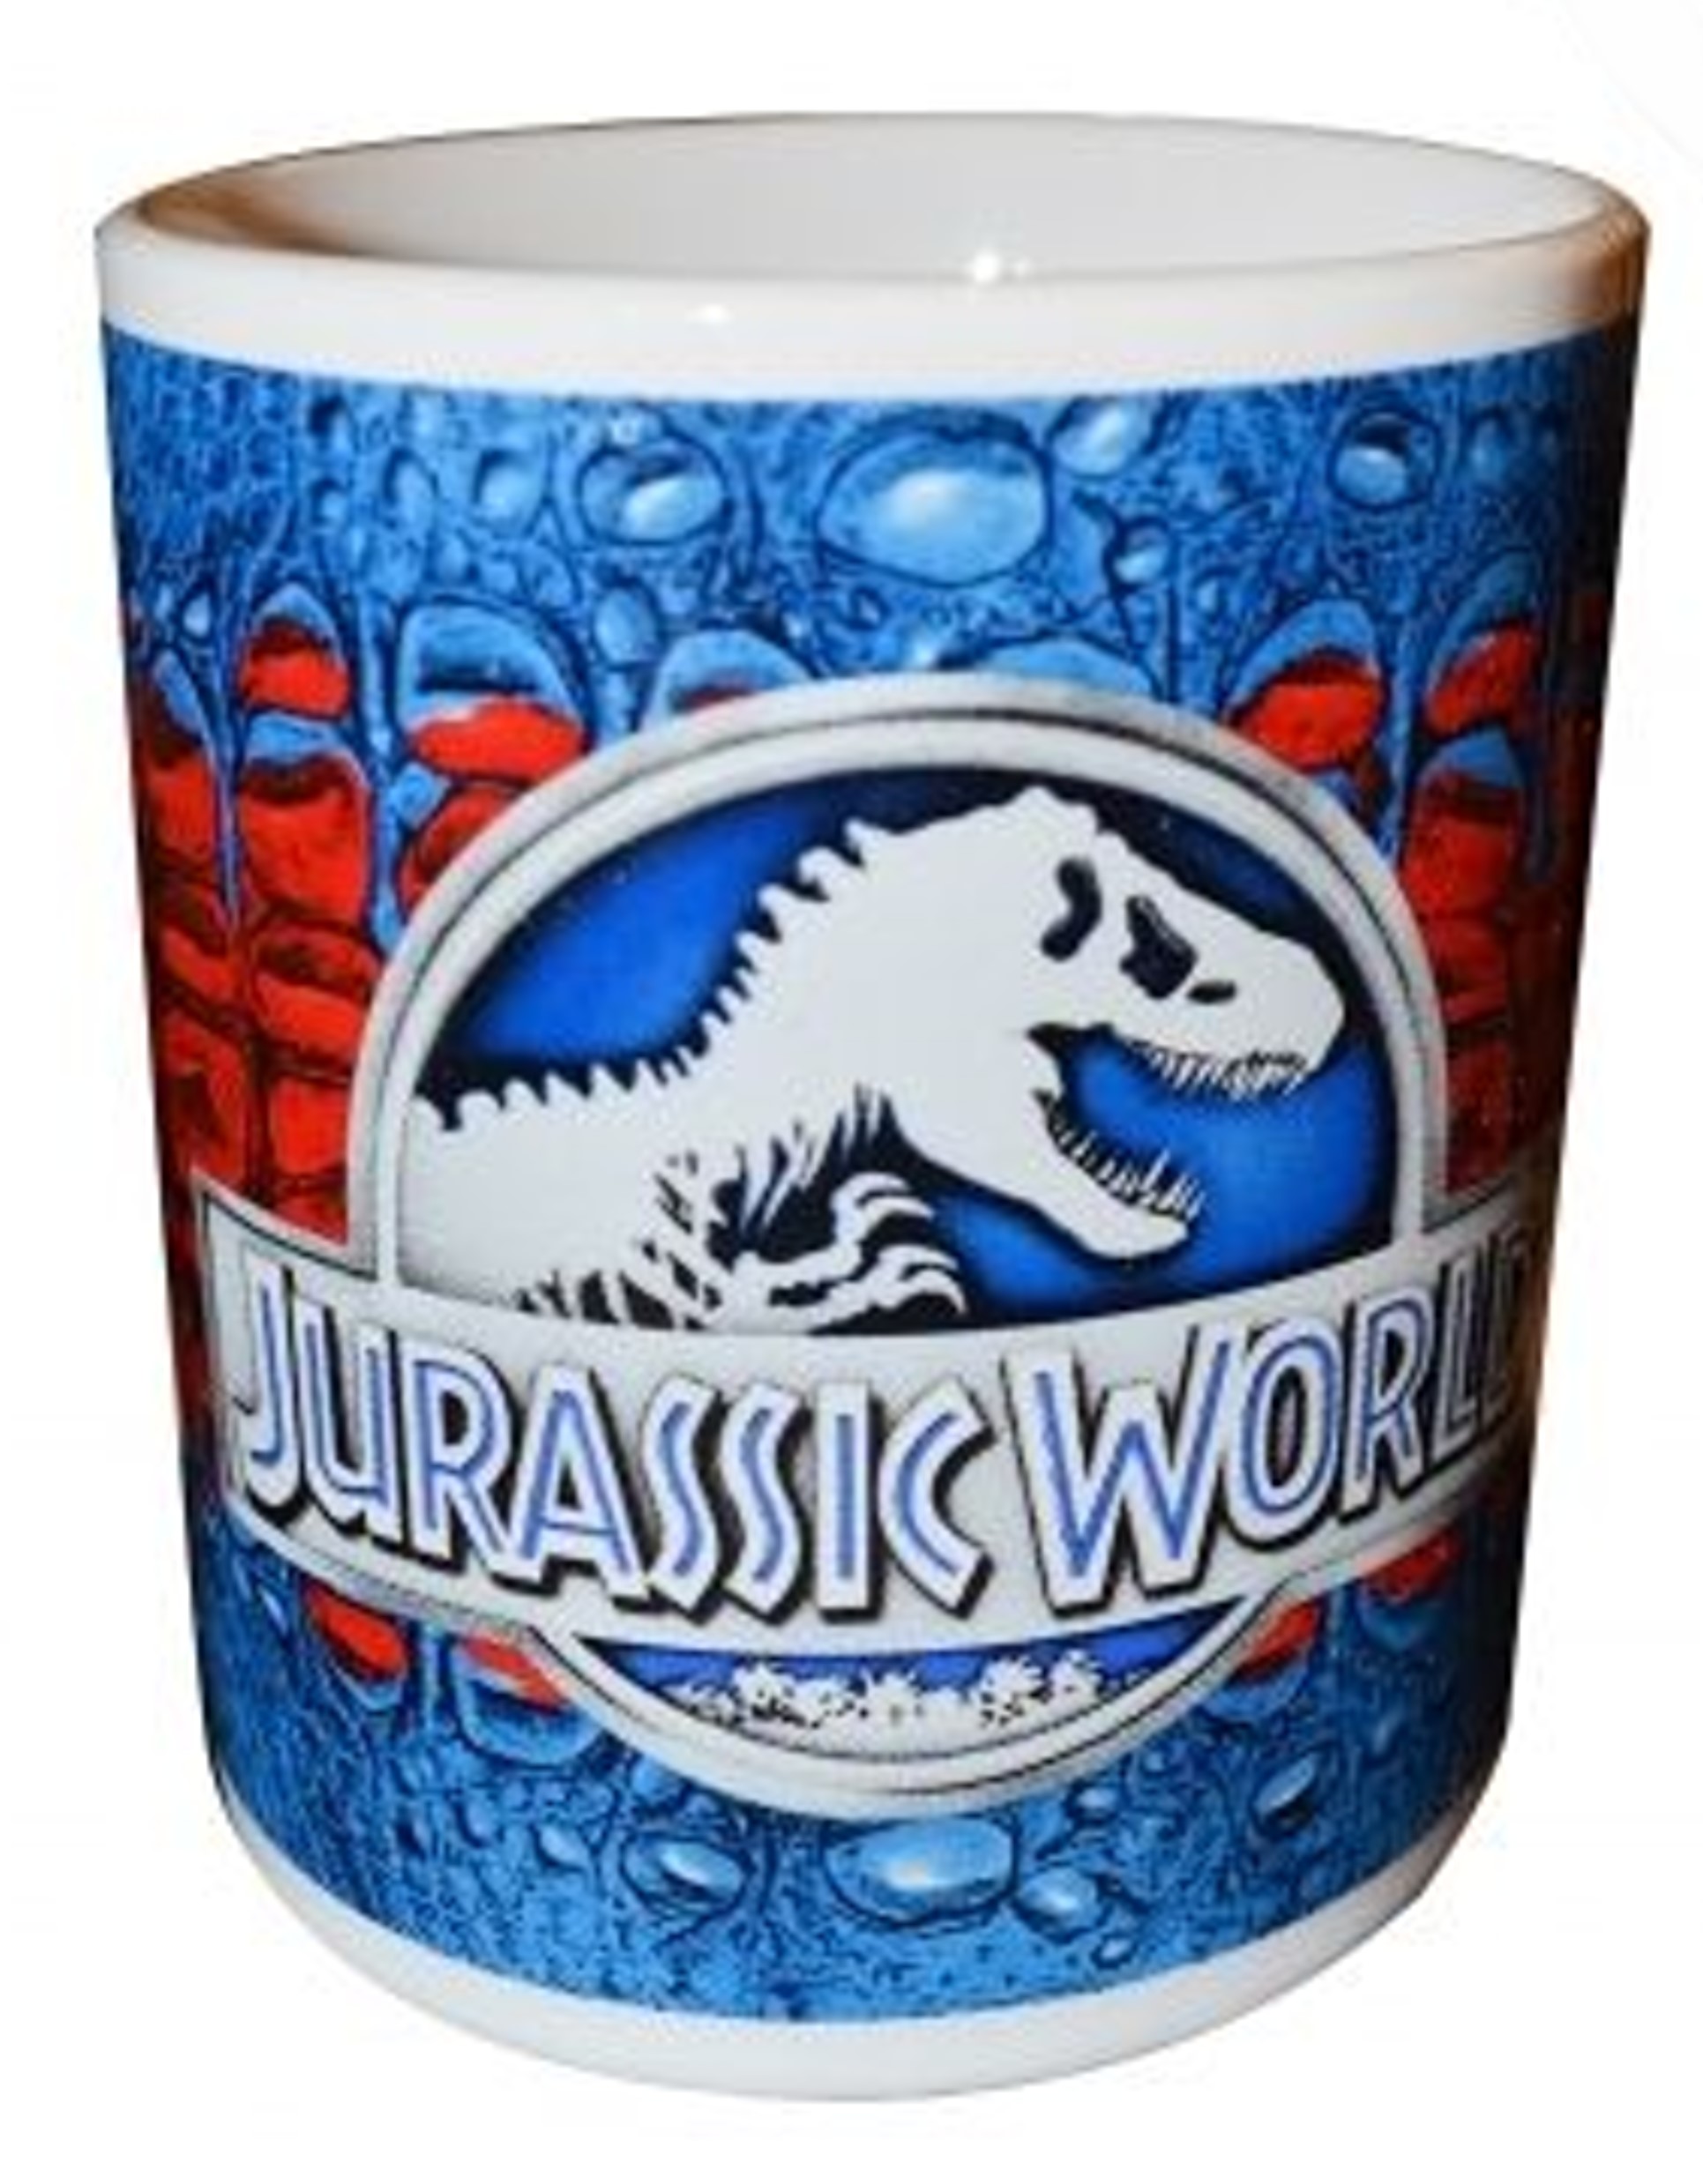 Jurassic World Mug A.jpg  by Thingimijigs